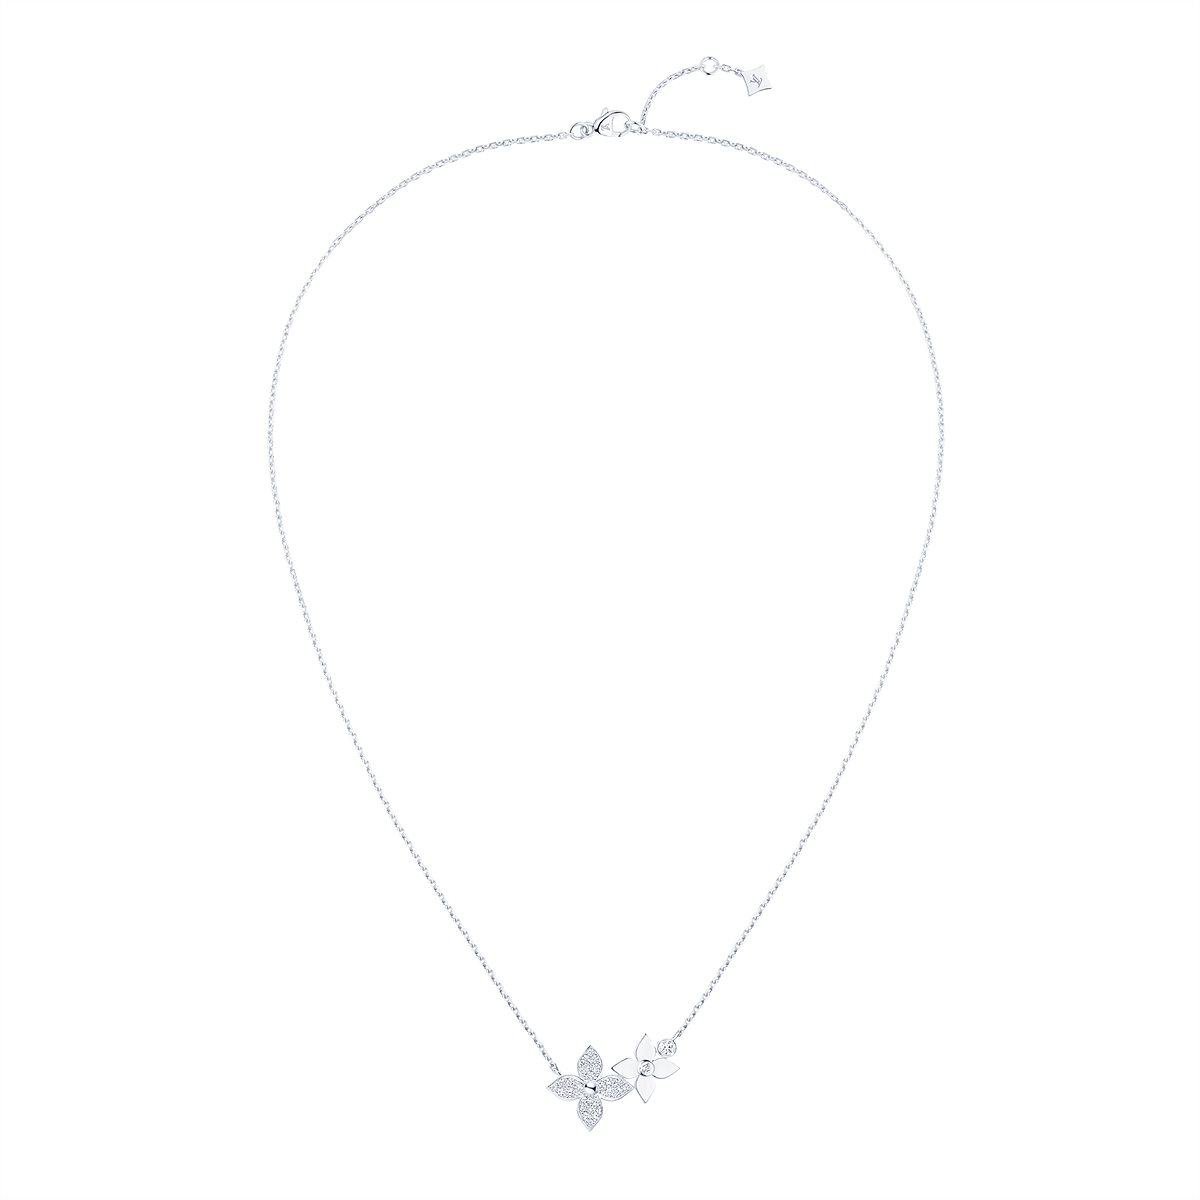 LV_Star Blossom Necklace, white gold, diamonds_EUR 4900,00